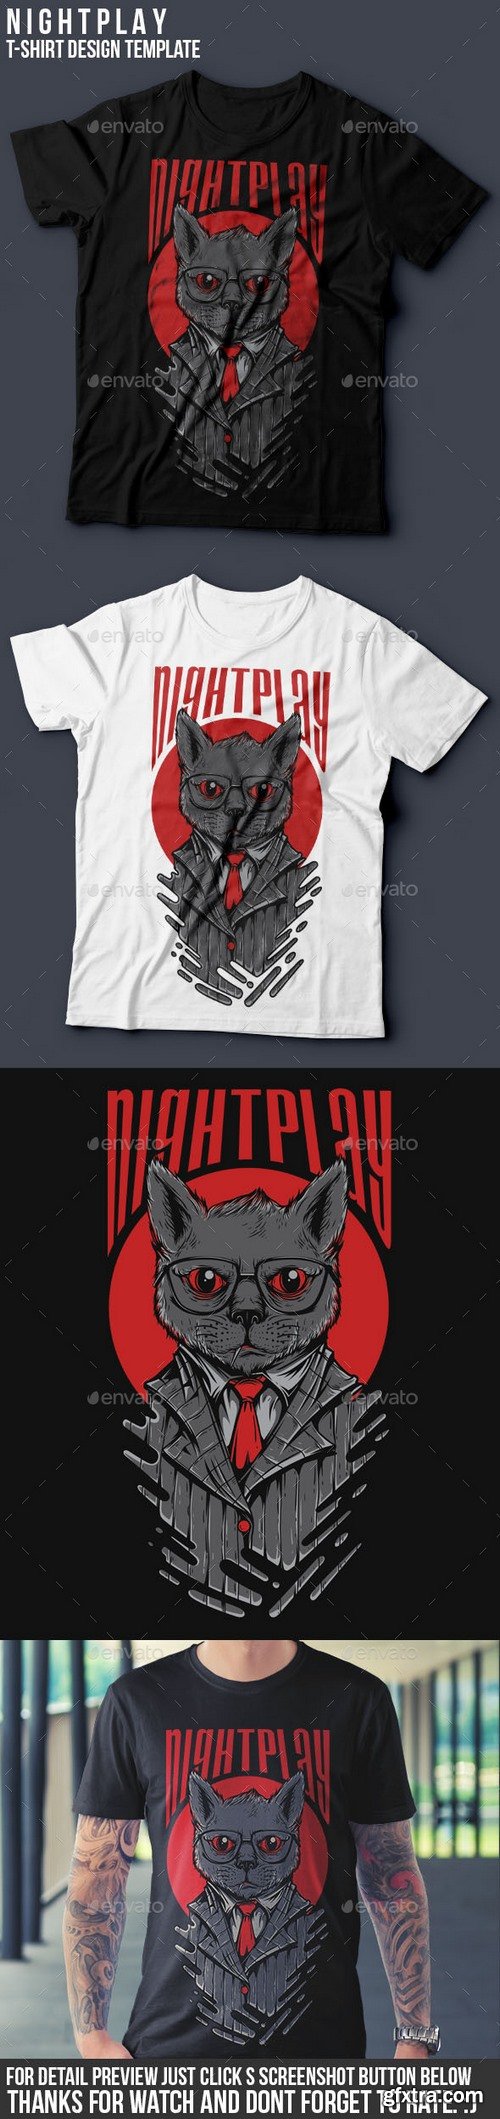 Graphicriver - Nightplay T-Shirt Design 16272334